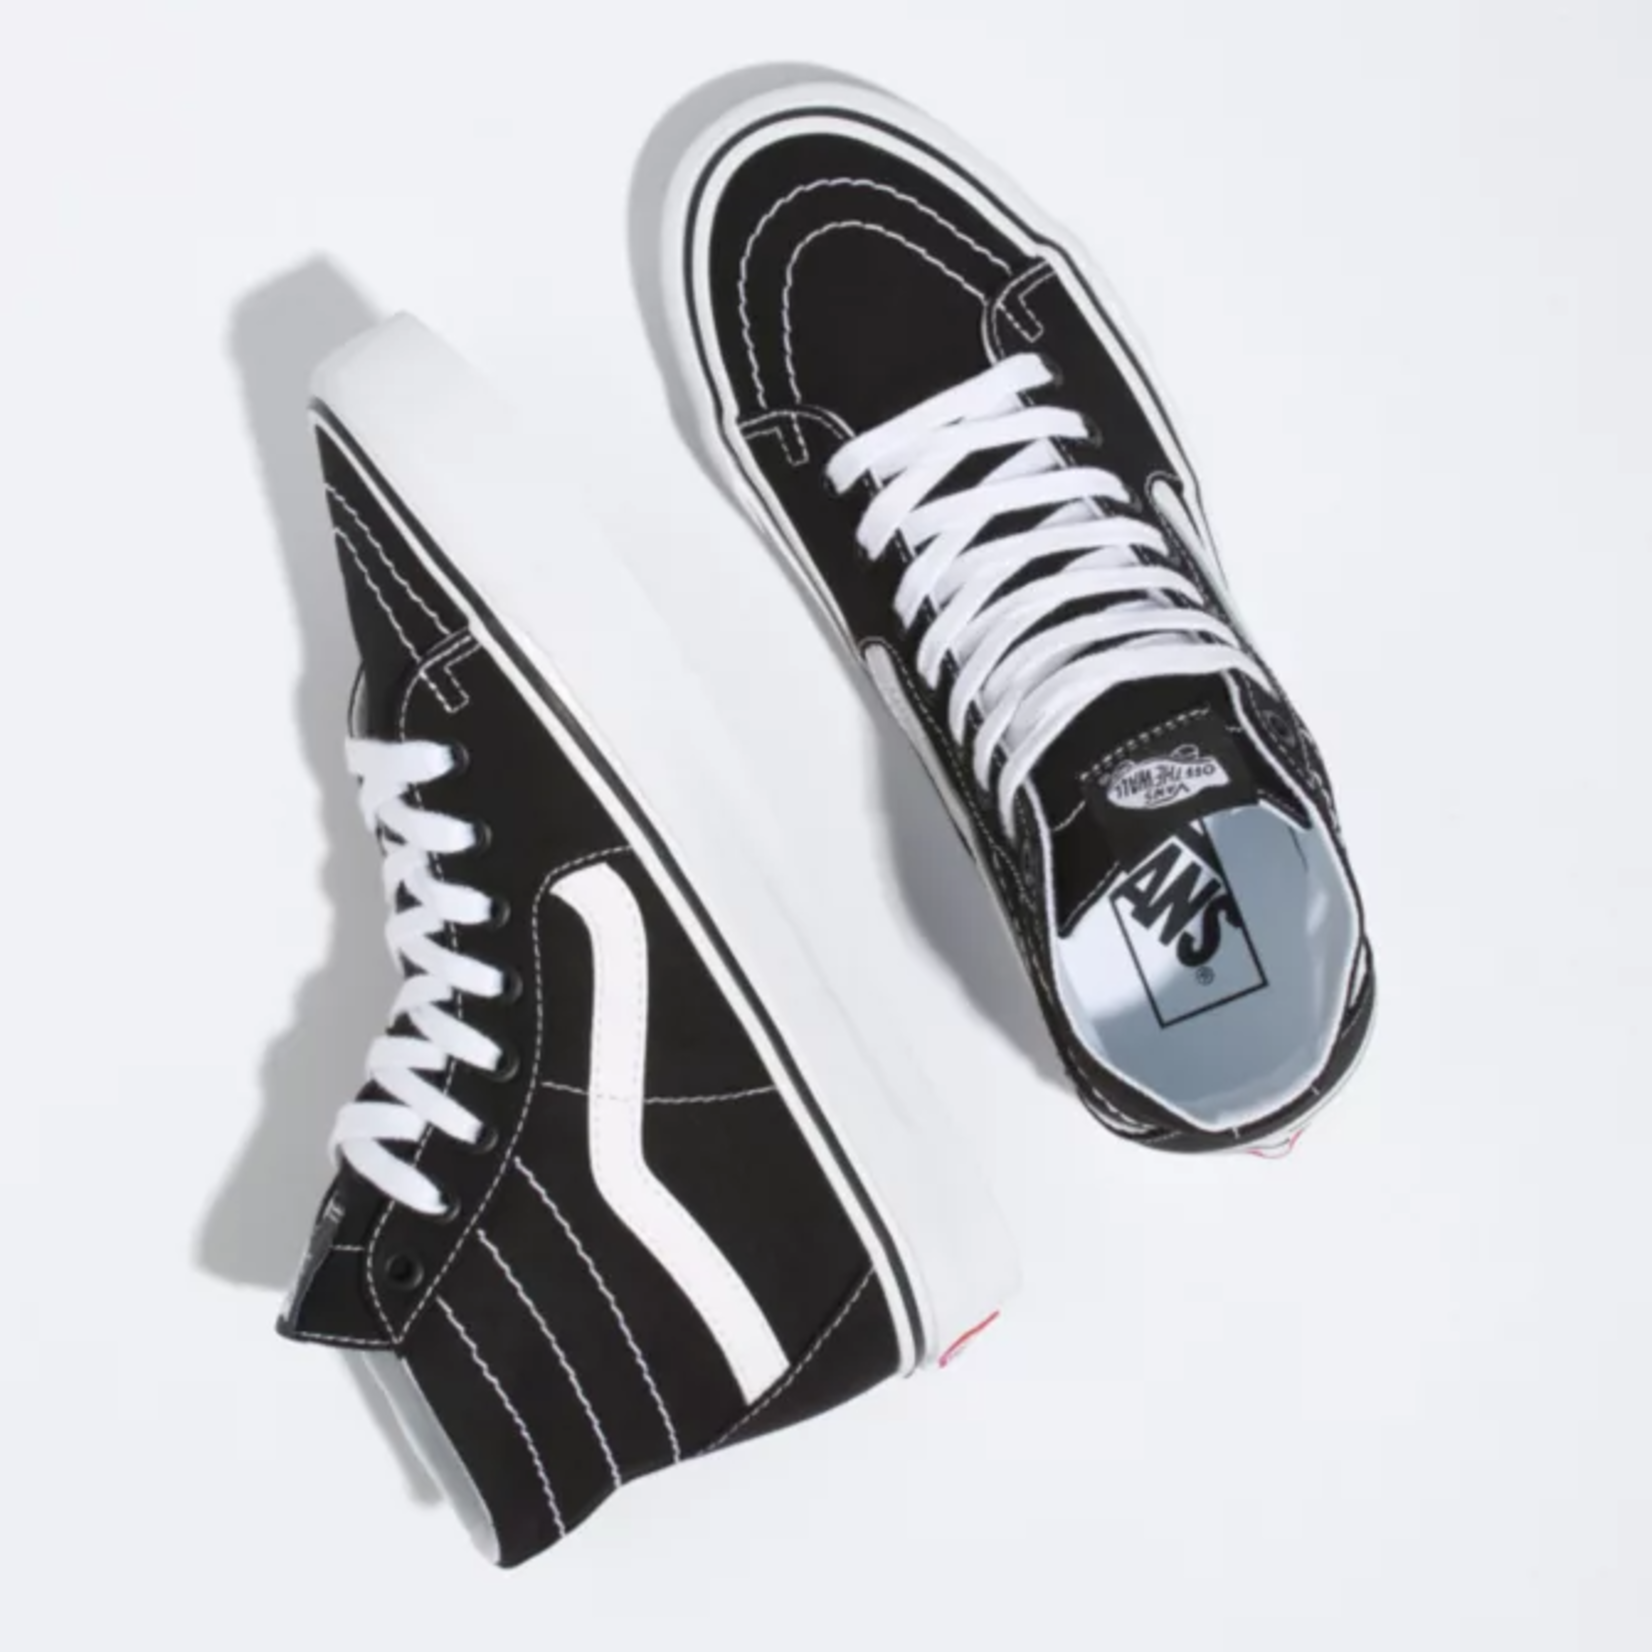 Vans Vans Sk8-Hi Tapered Youth Skate Shoes - Black/True White -